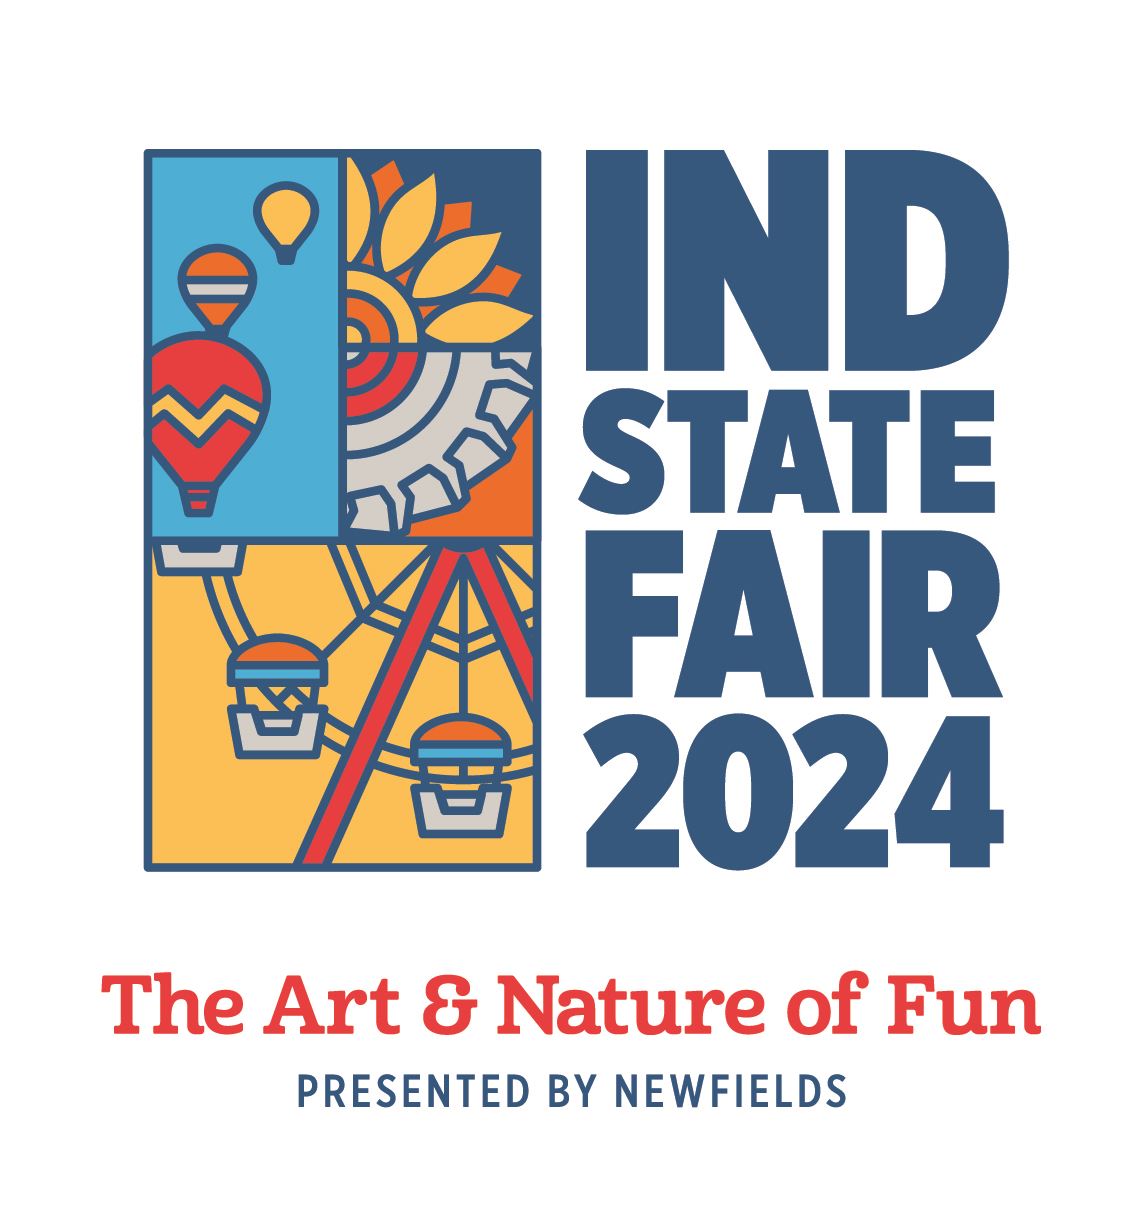 Mo State Fair 2024: Unforgettable Experiences Await!